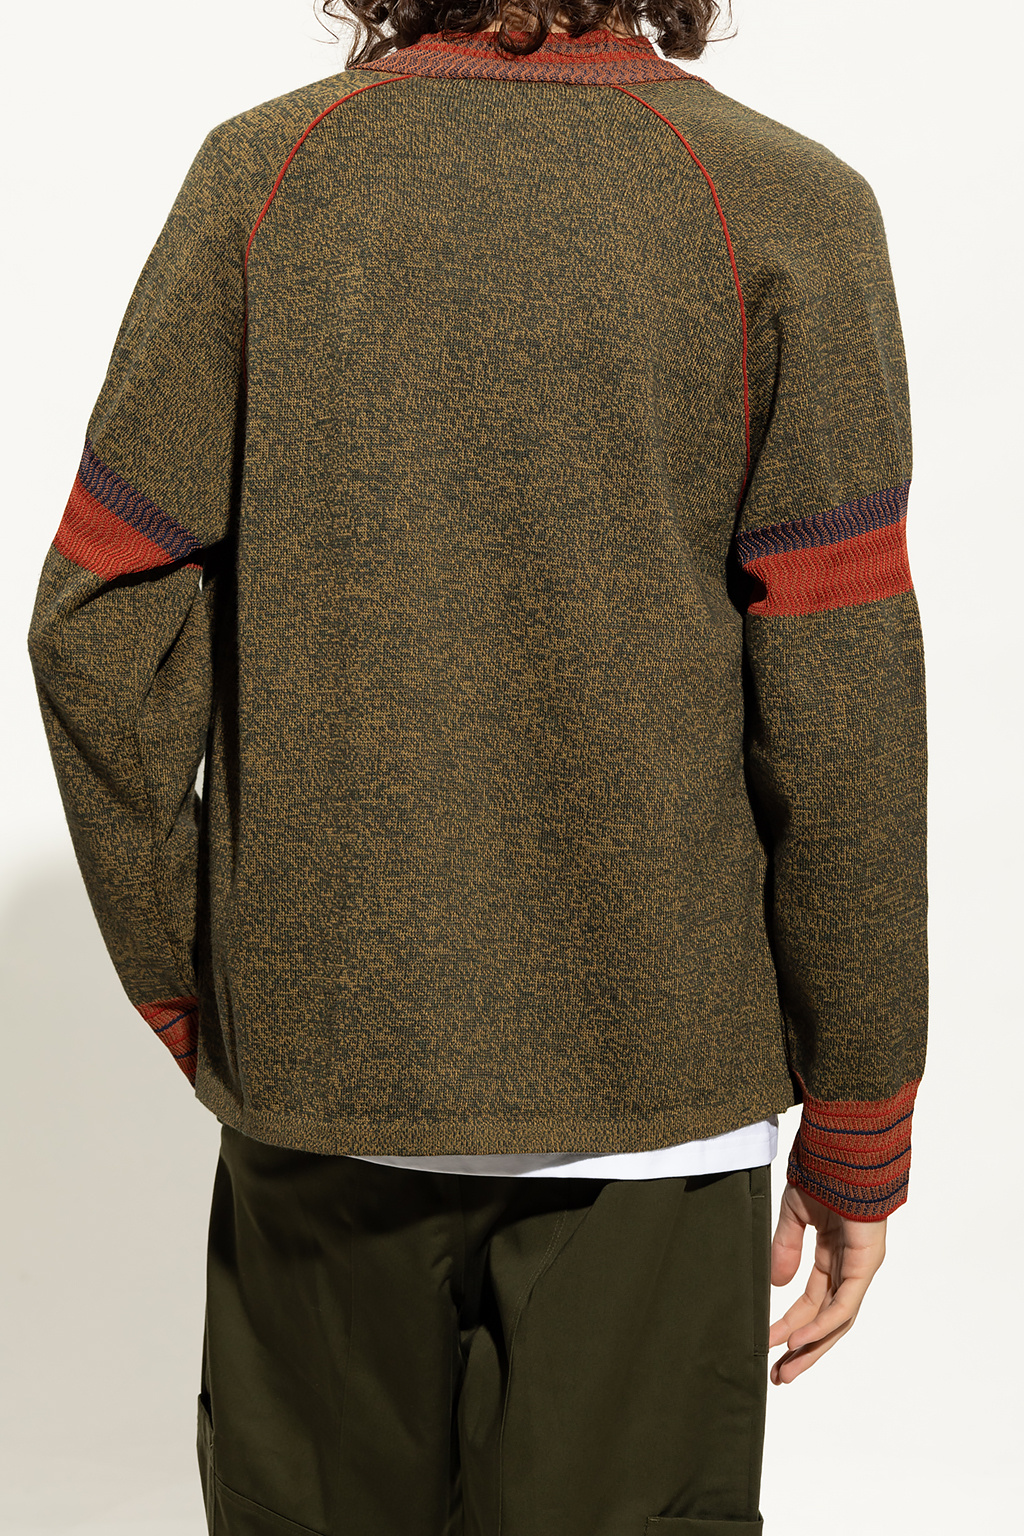 Wales Bonner 'Fusion' zip-up sweater | Men's Clothing | Vitkac